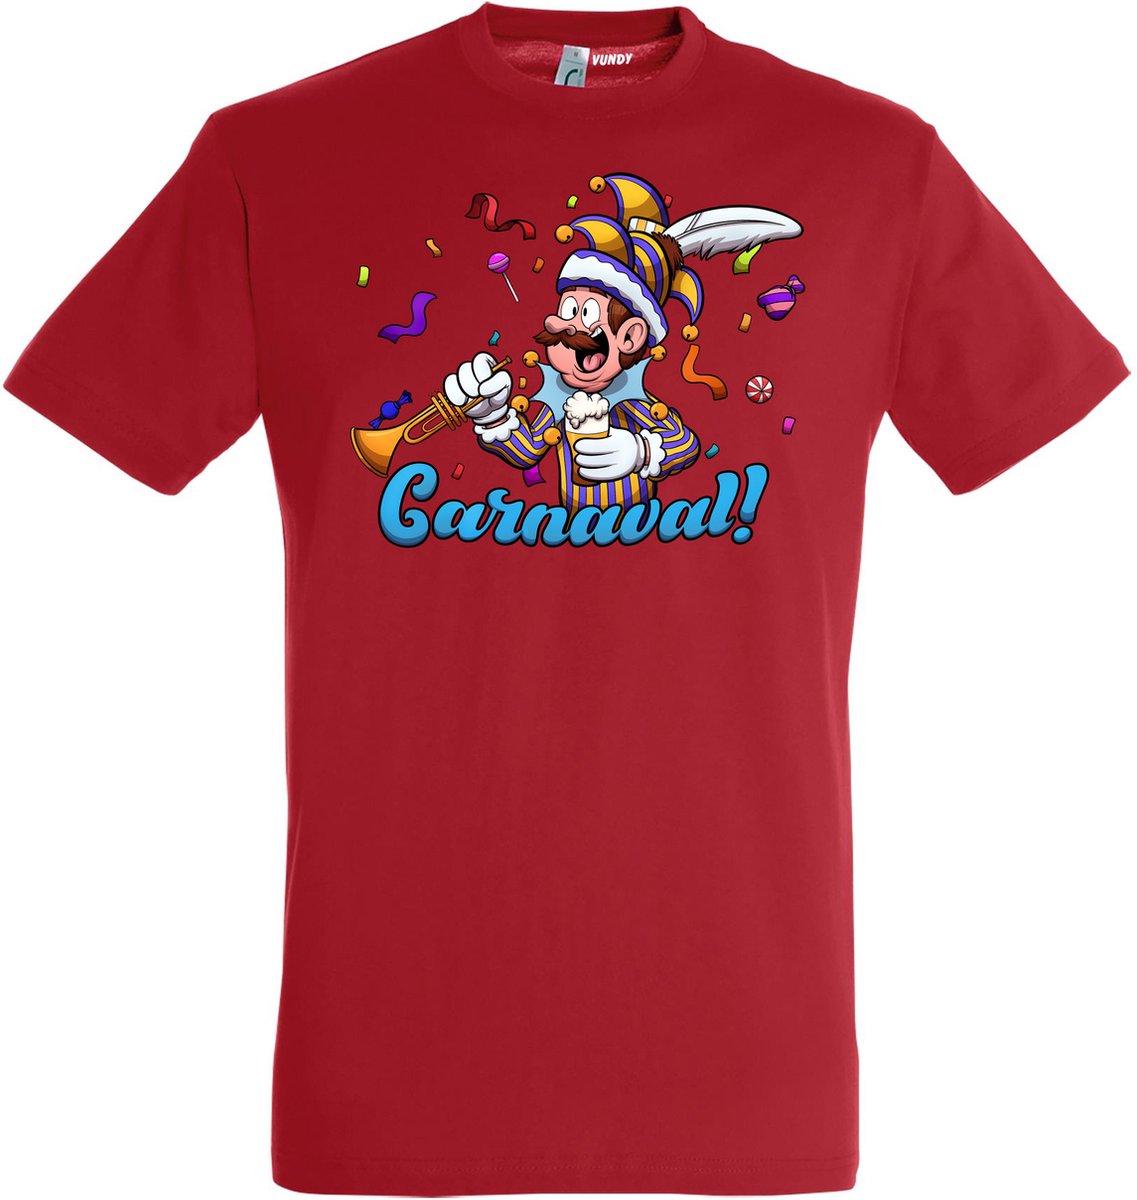 T-shirt Carnavalluh | Carnaval | Carnavalskleding Dames Heren | Rood | maat XS